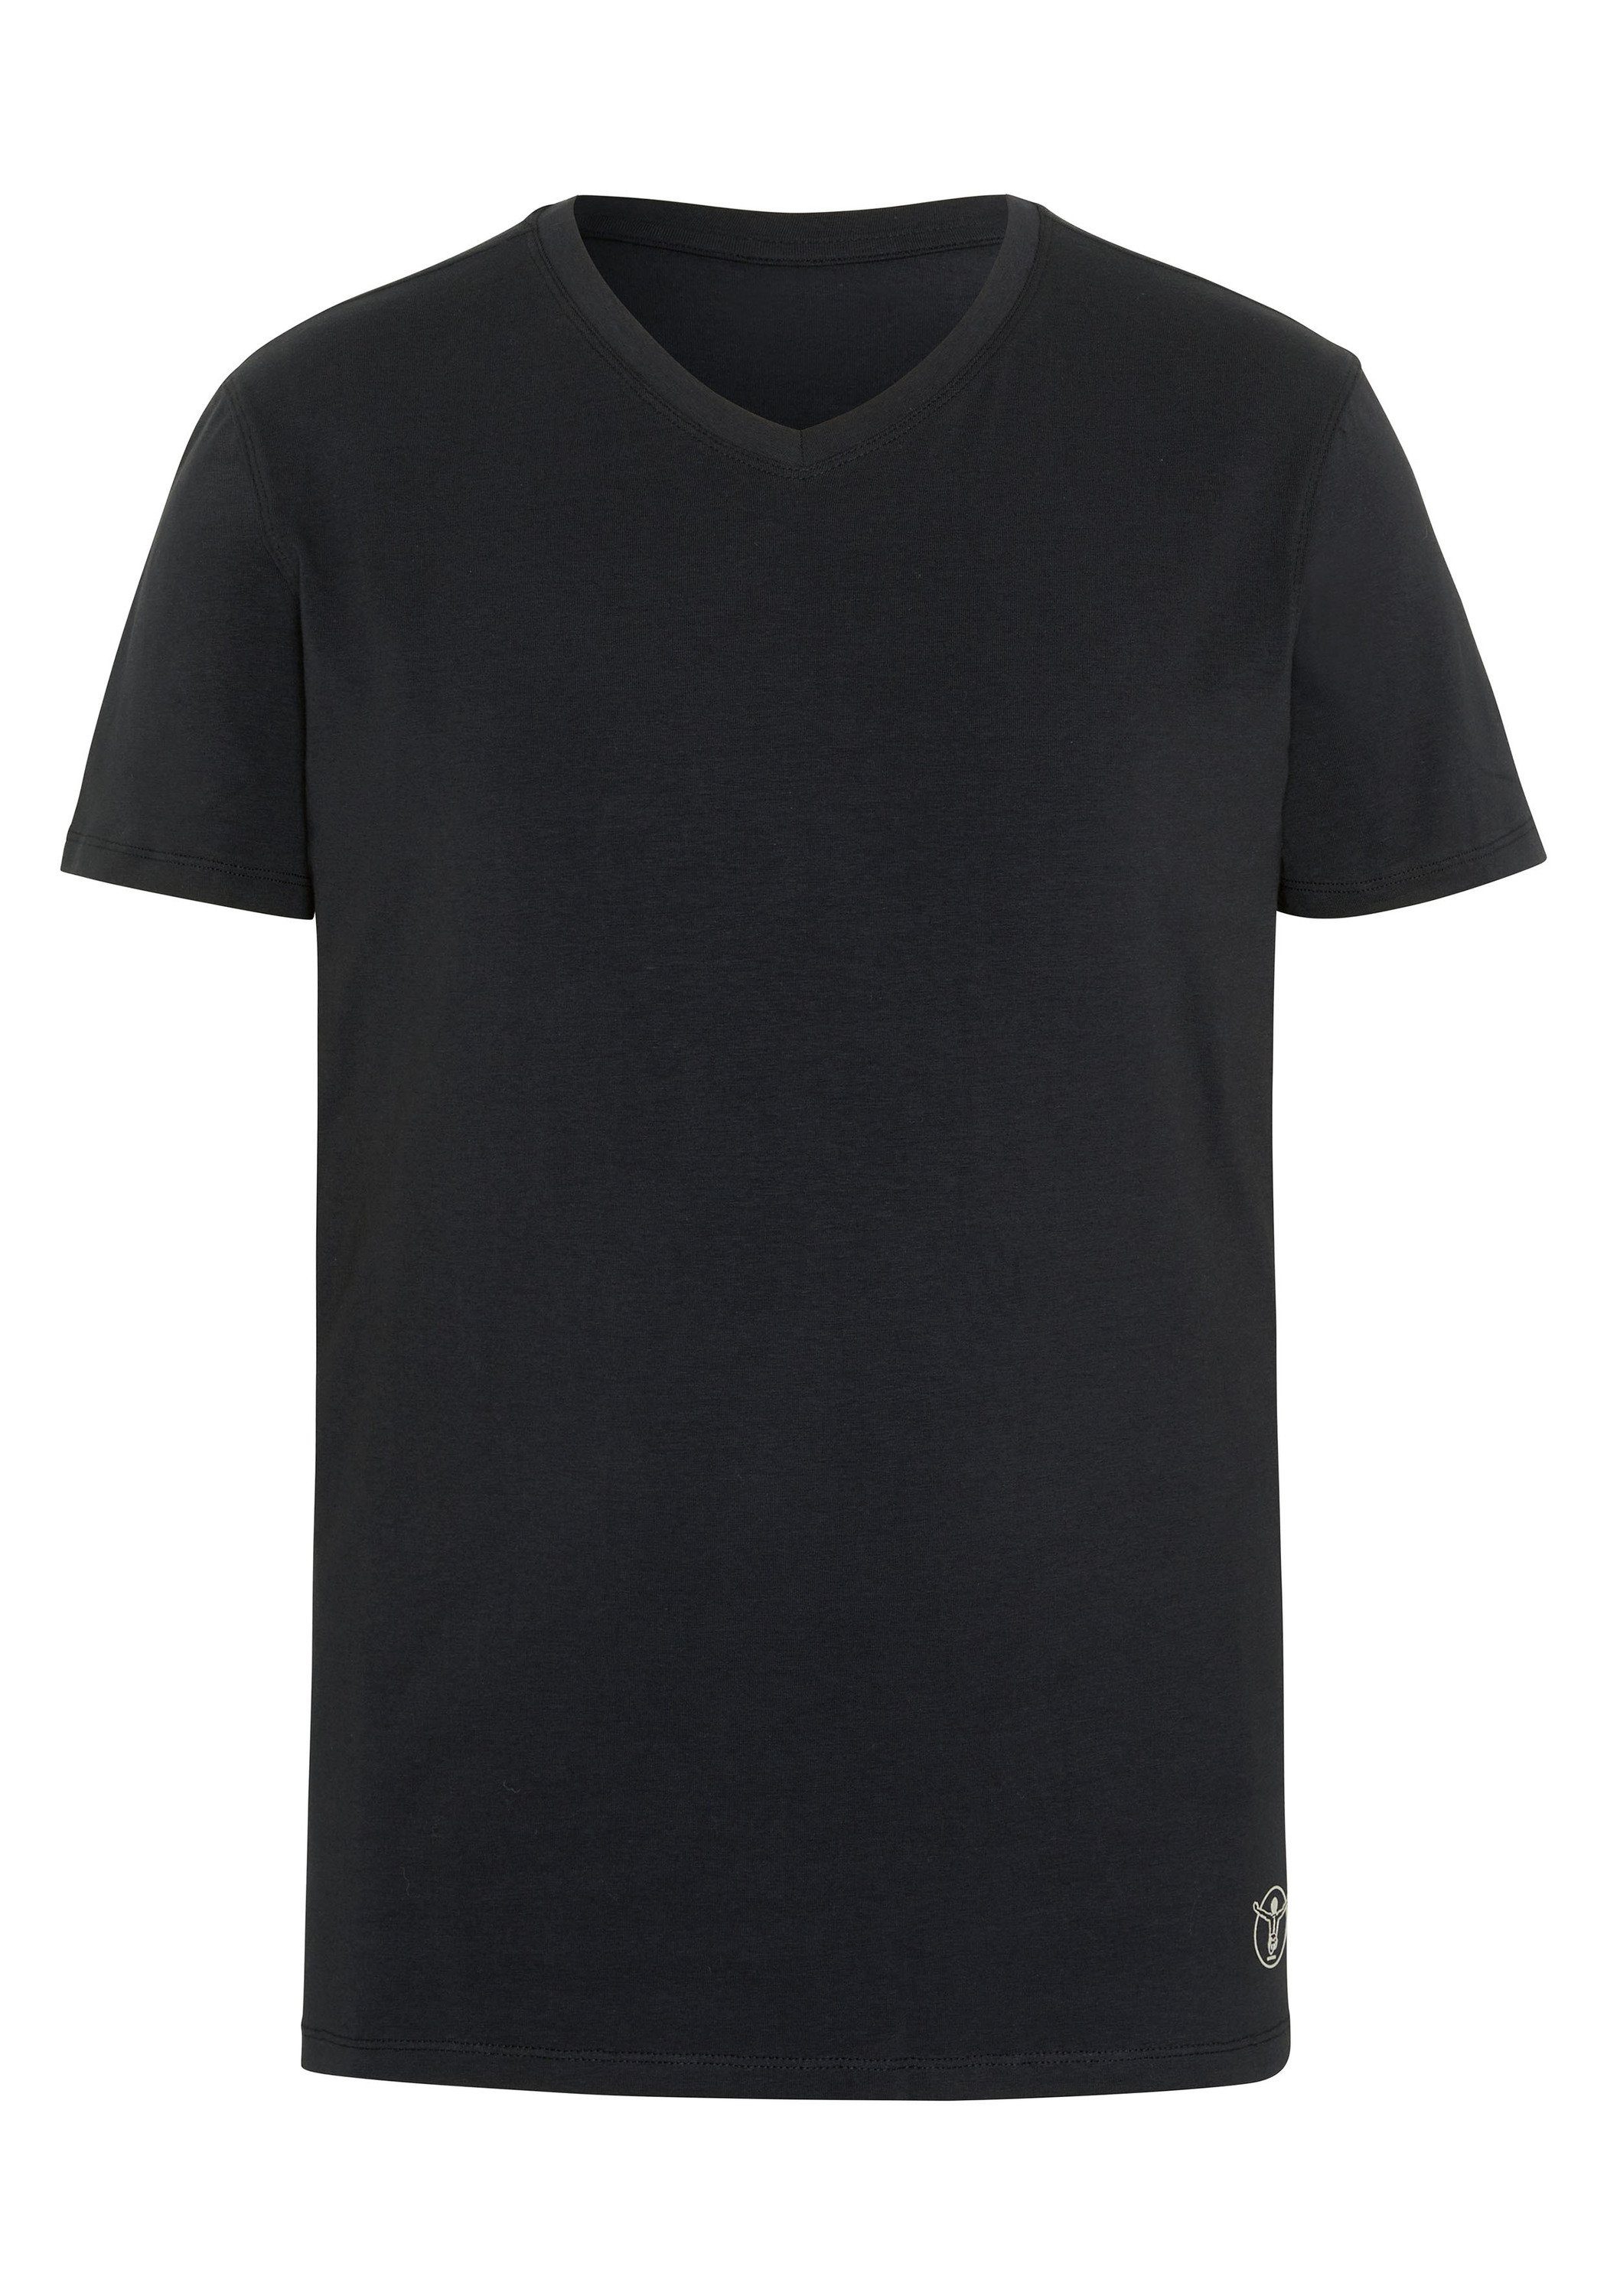 [Super günstiger Sonderpreis] Chiemsee T-Shirt T-Shirt Beauty im 19-3911 mit V-Neck Black 1 Doppelpack